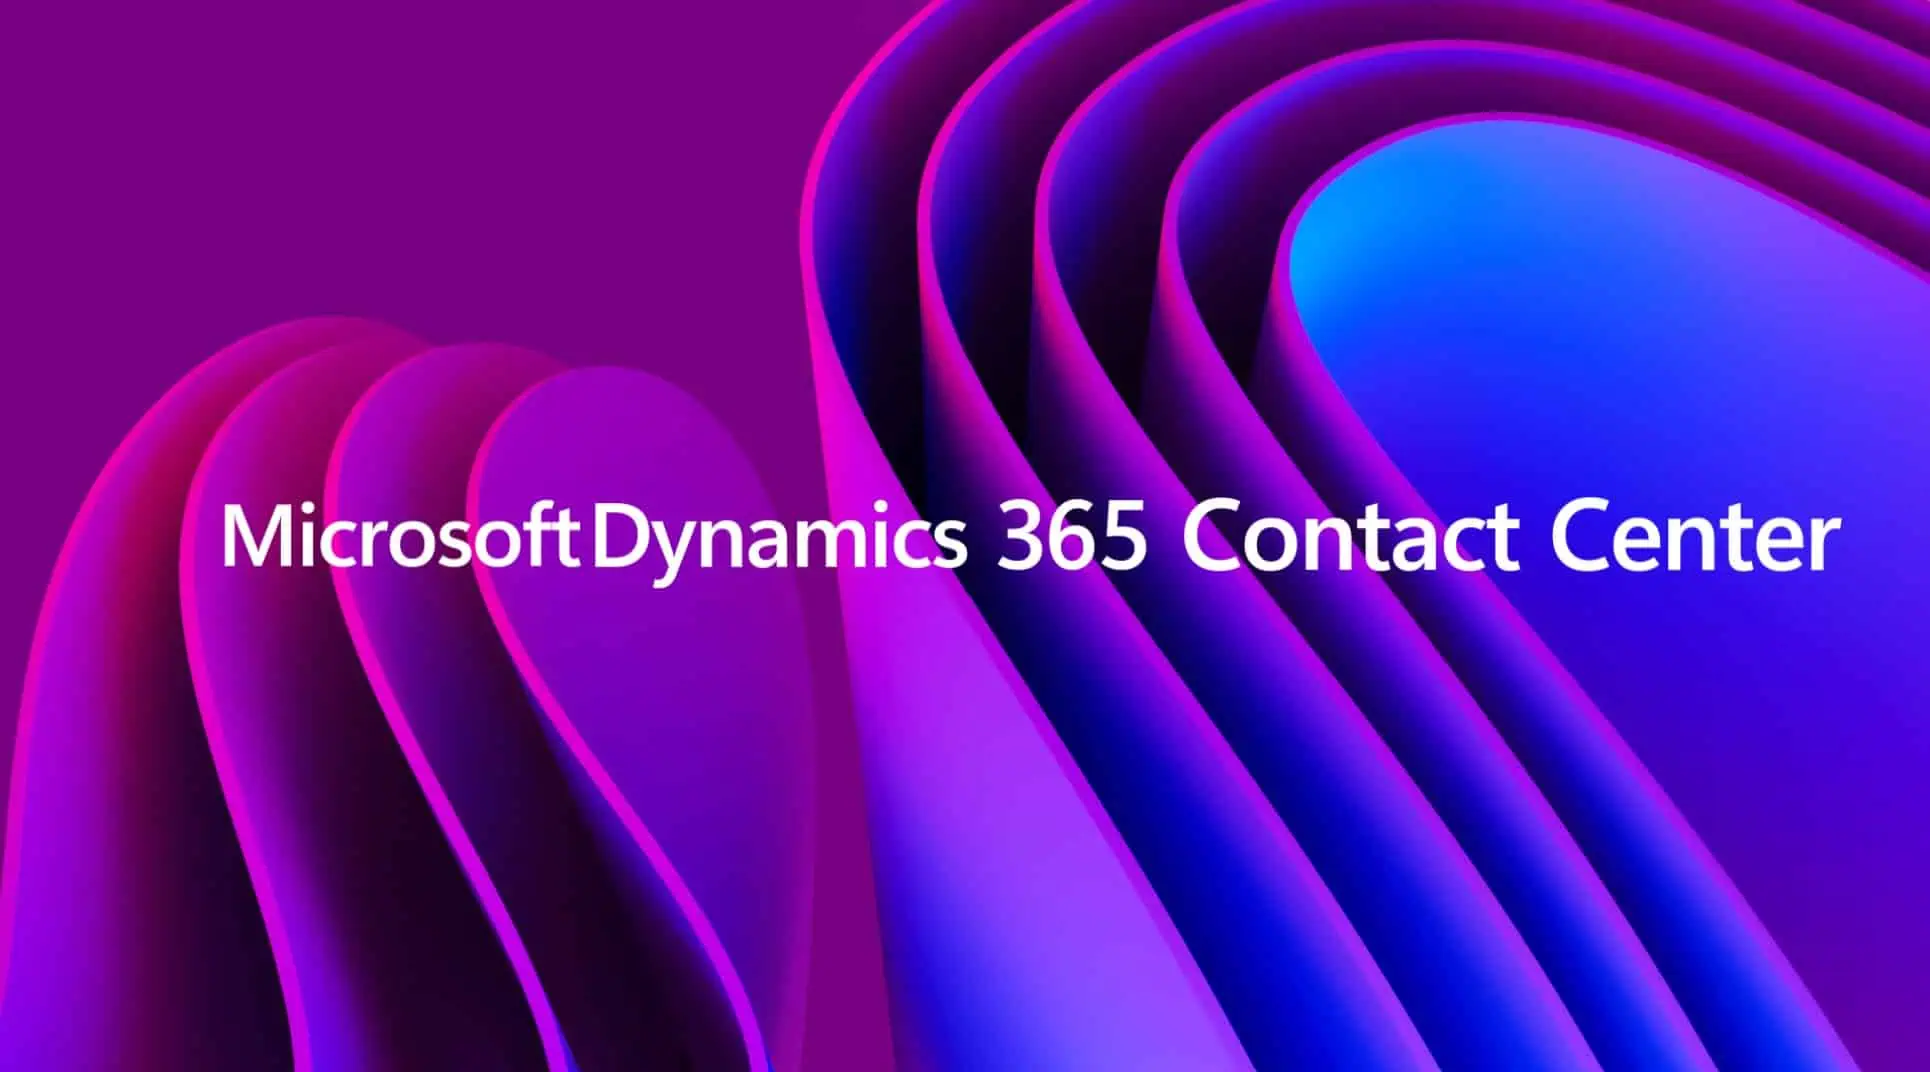 Microsoft Dynamics 365 Contact Center